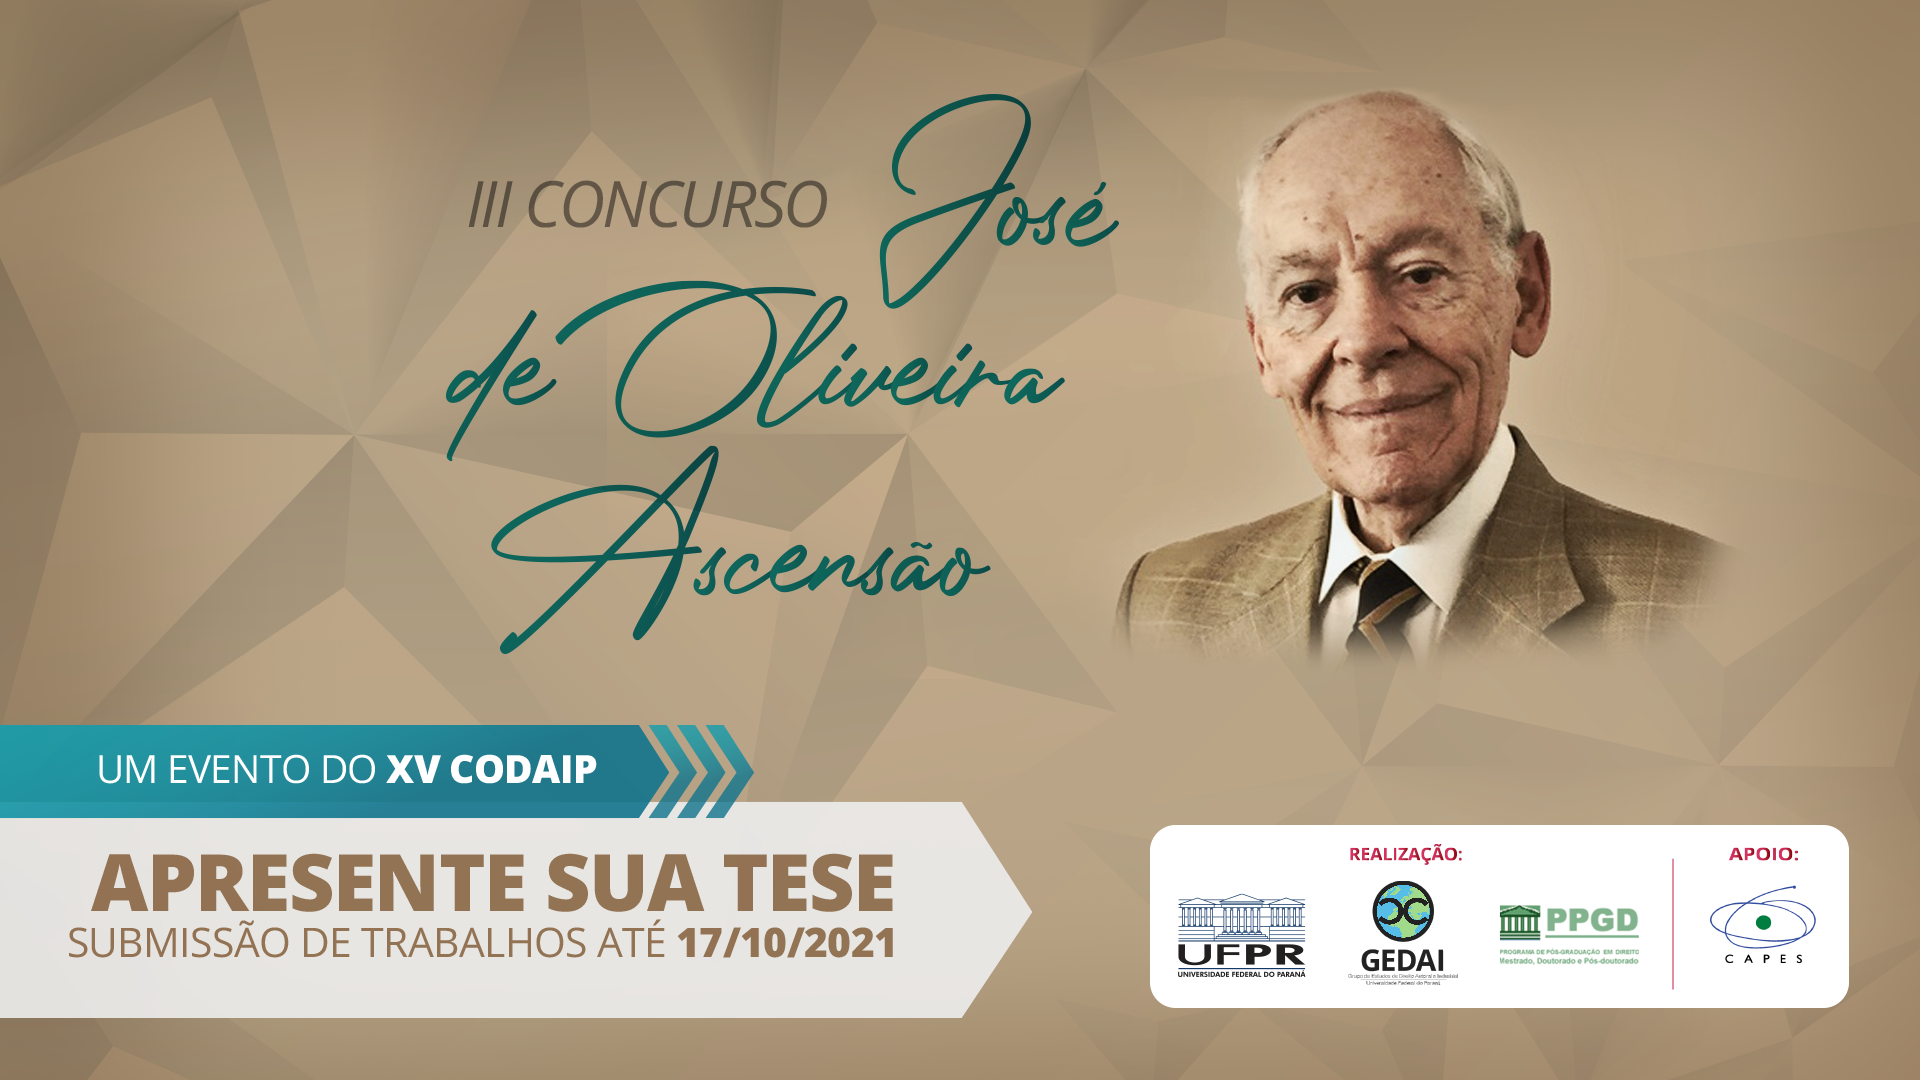 III CONCURSO JOSÉ DE OLIVEIRA ASCENSÃO de TESES